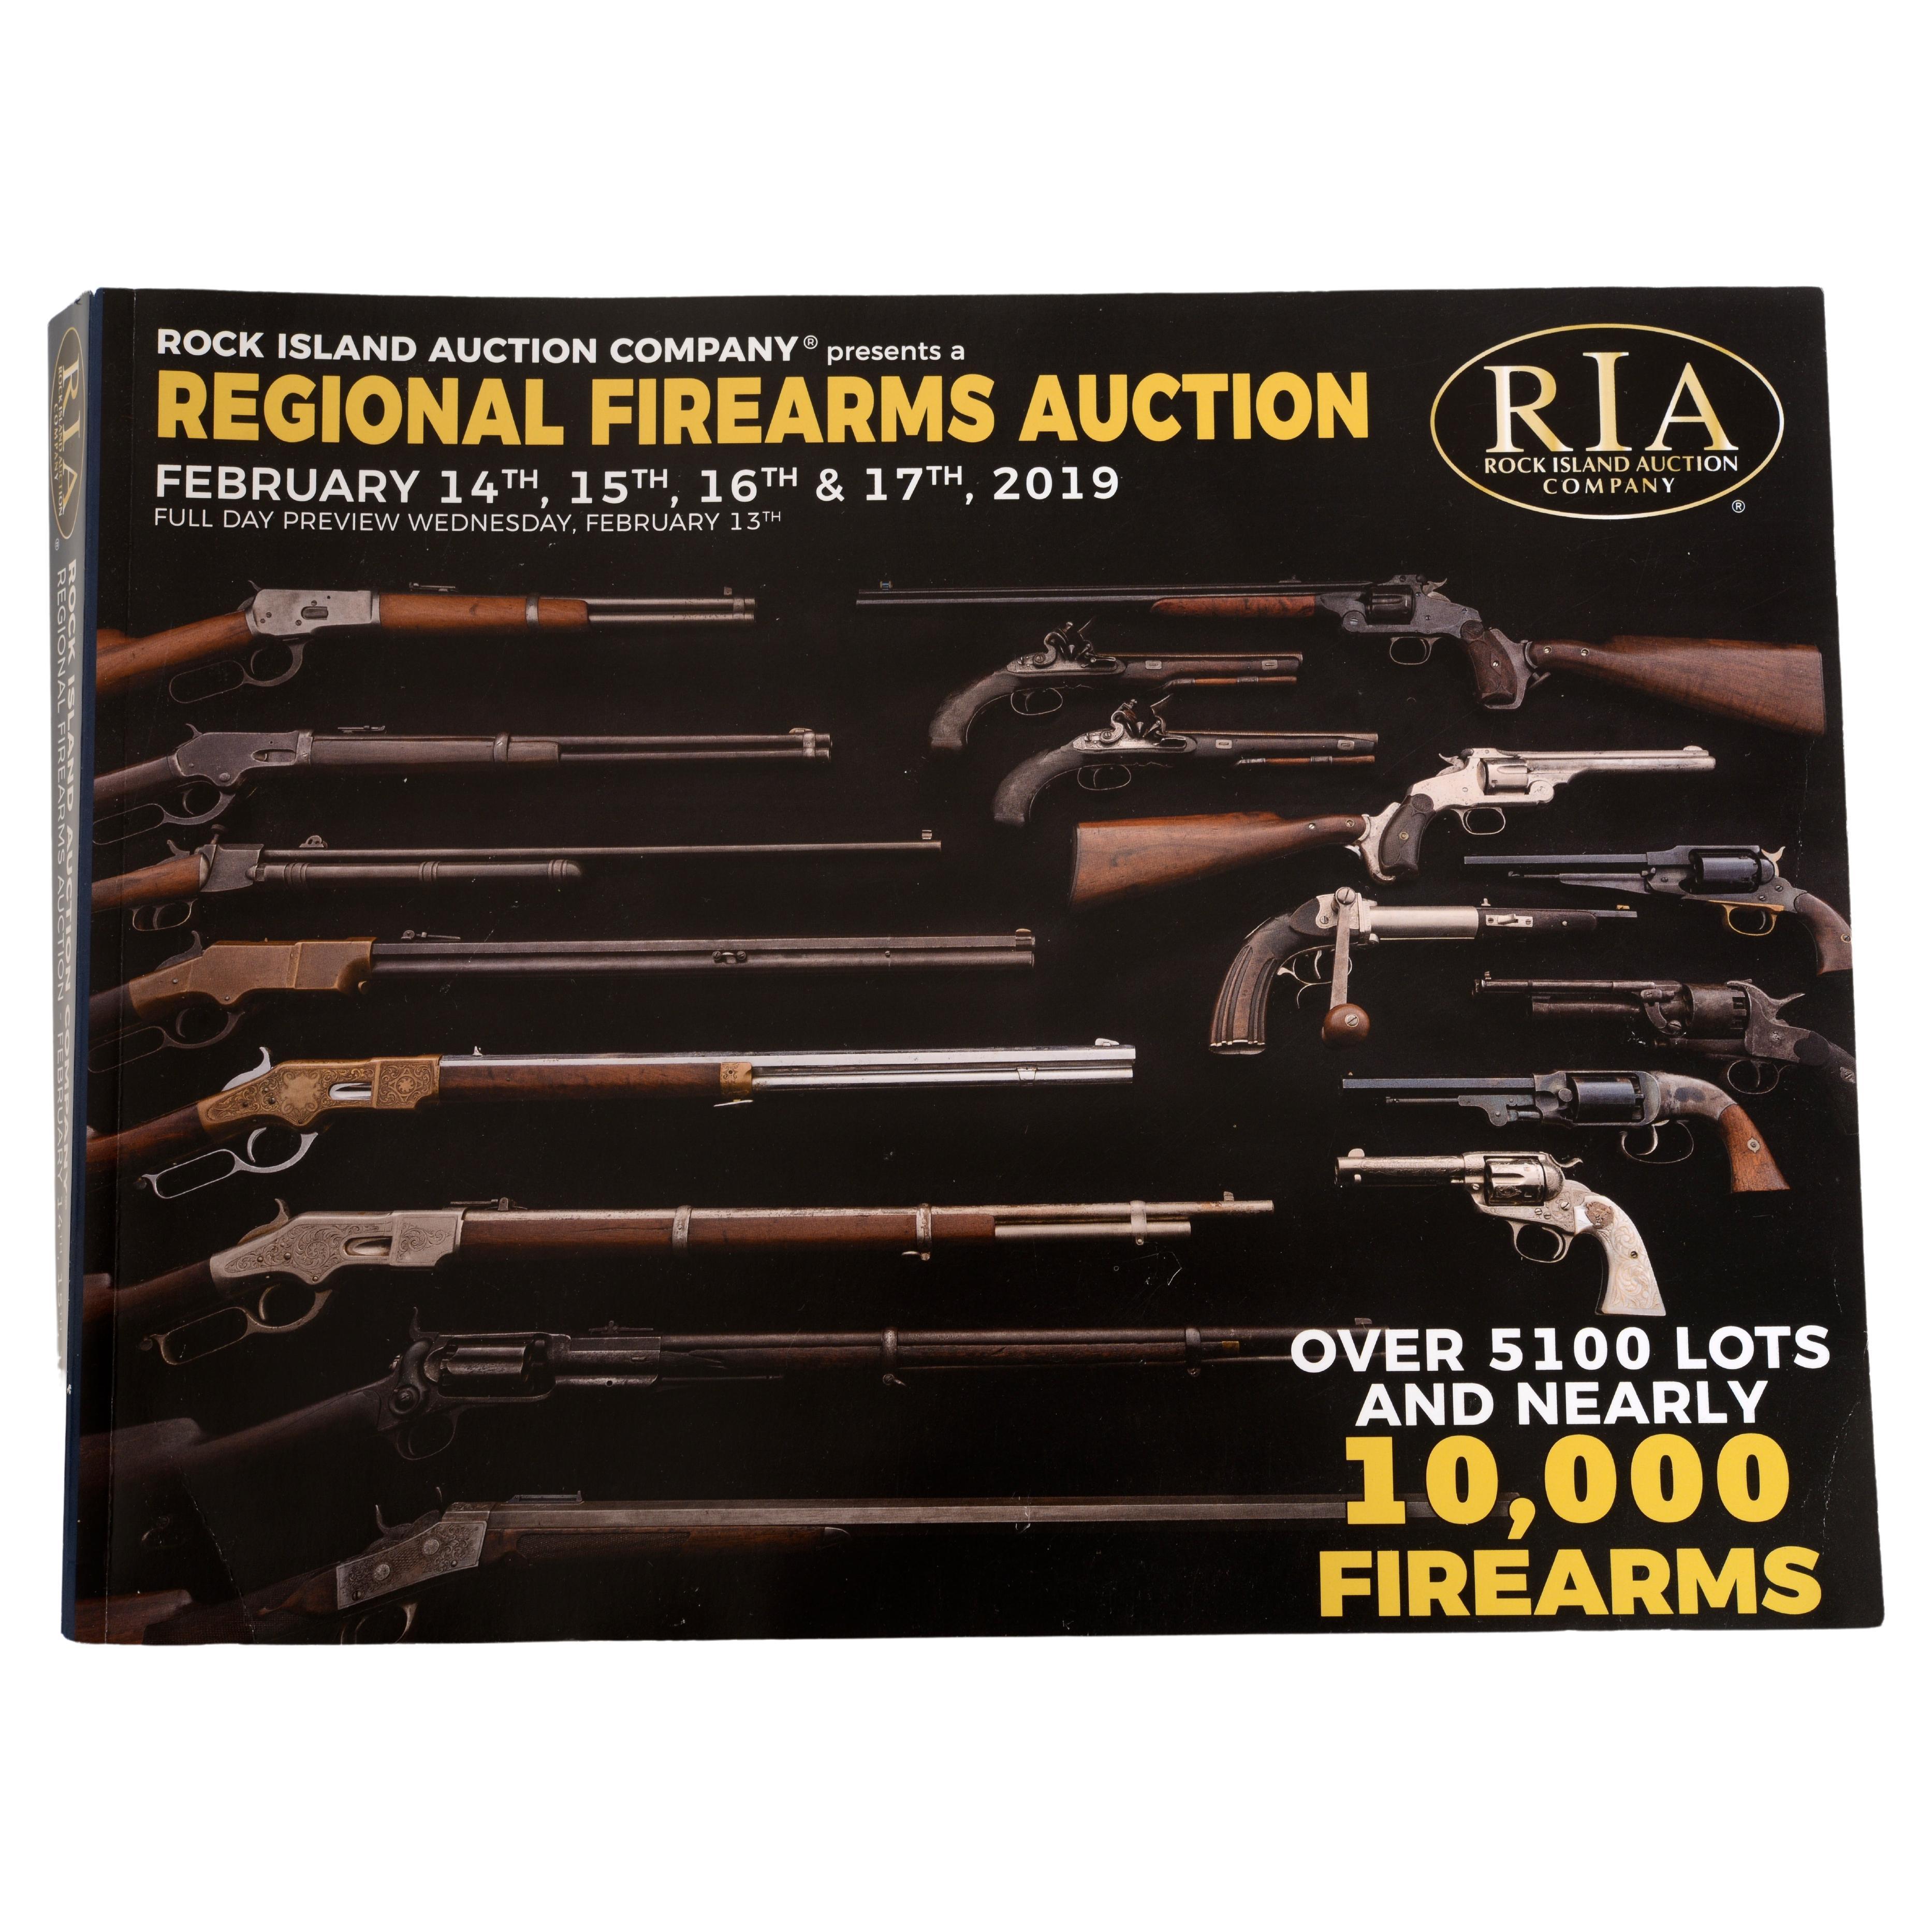 Regional Firearms Auction February 2019, Rock Island Auction 1st Ed For Sale